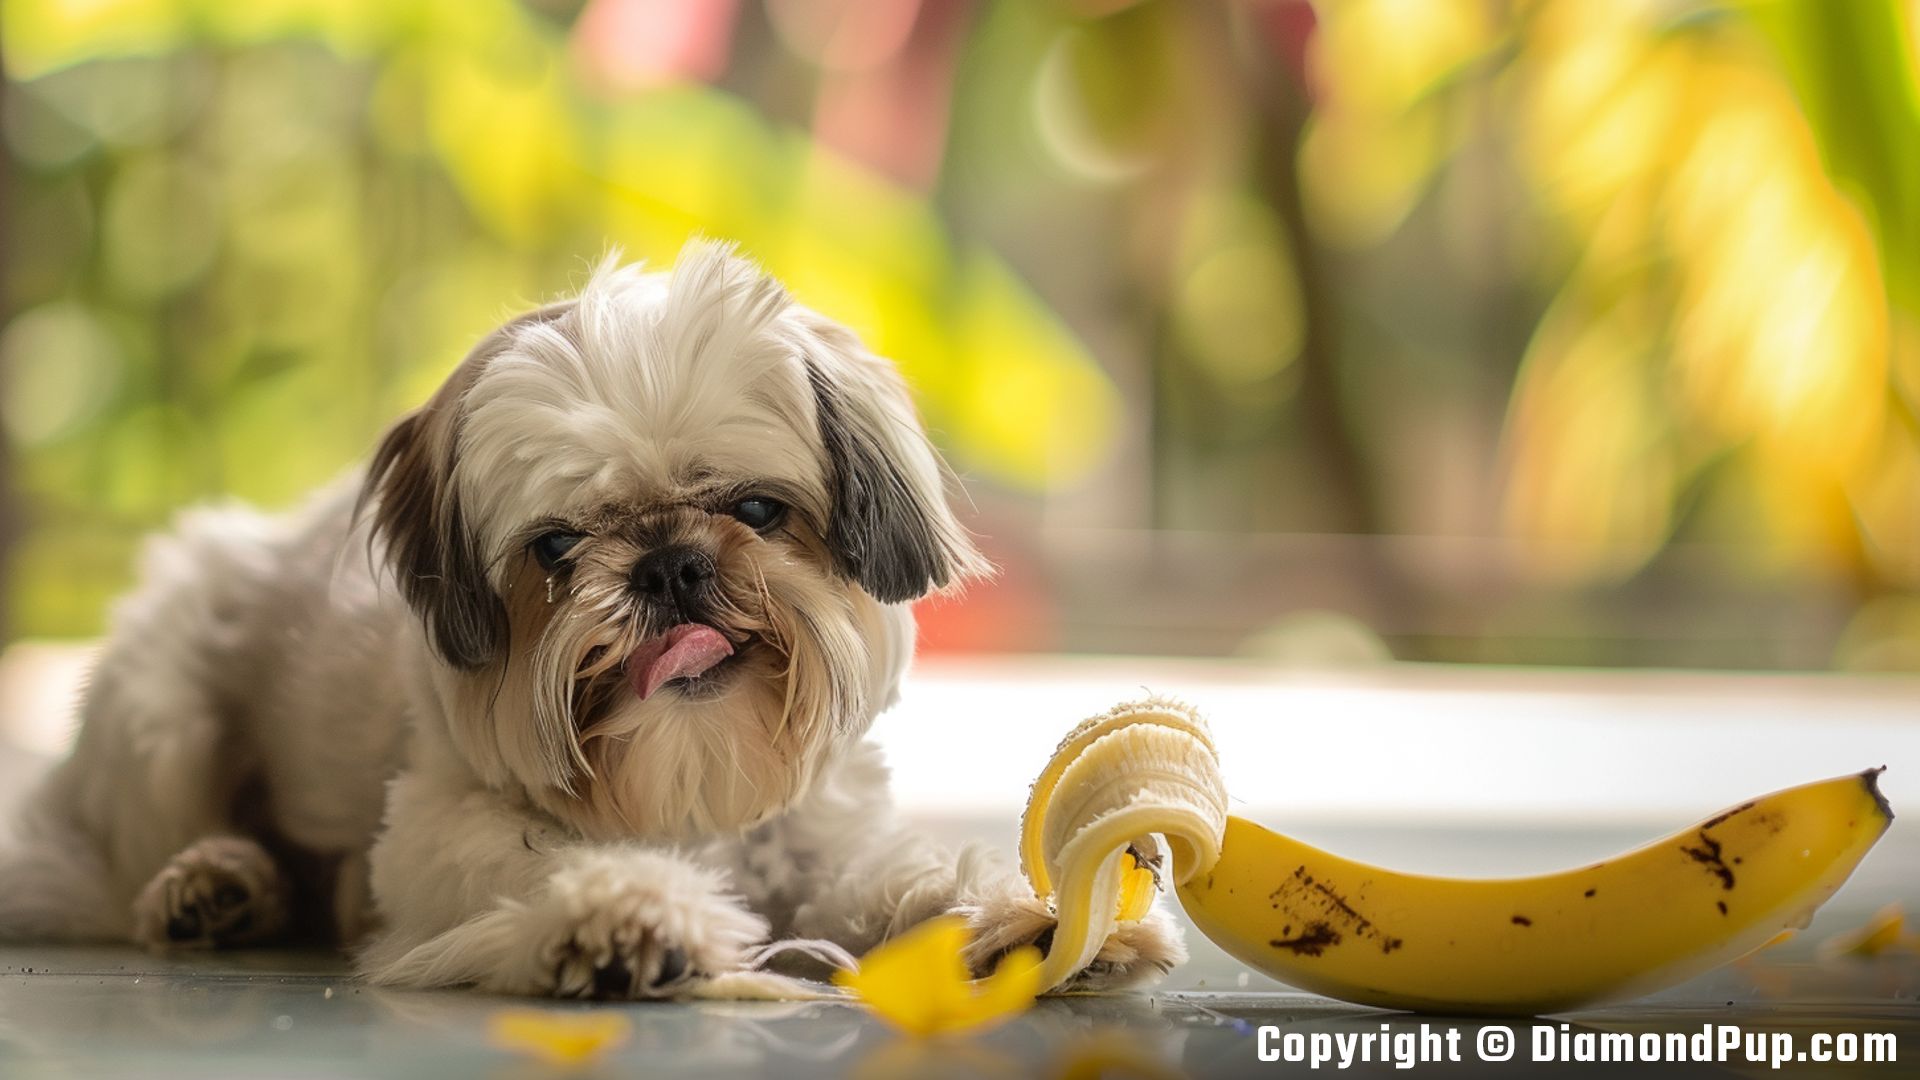 Photograph of a Happy Shih Tzu Snacking on Banana